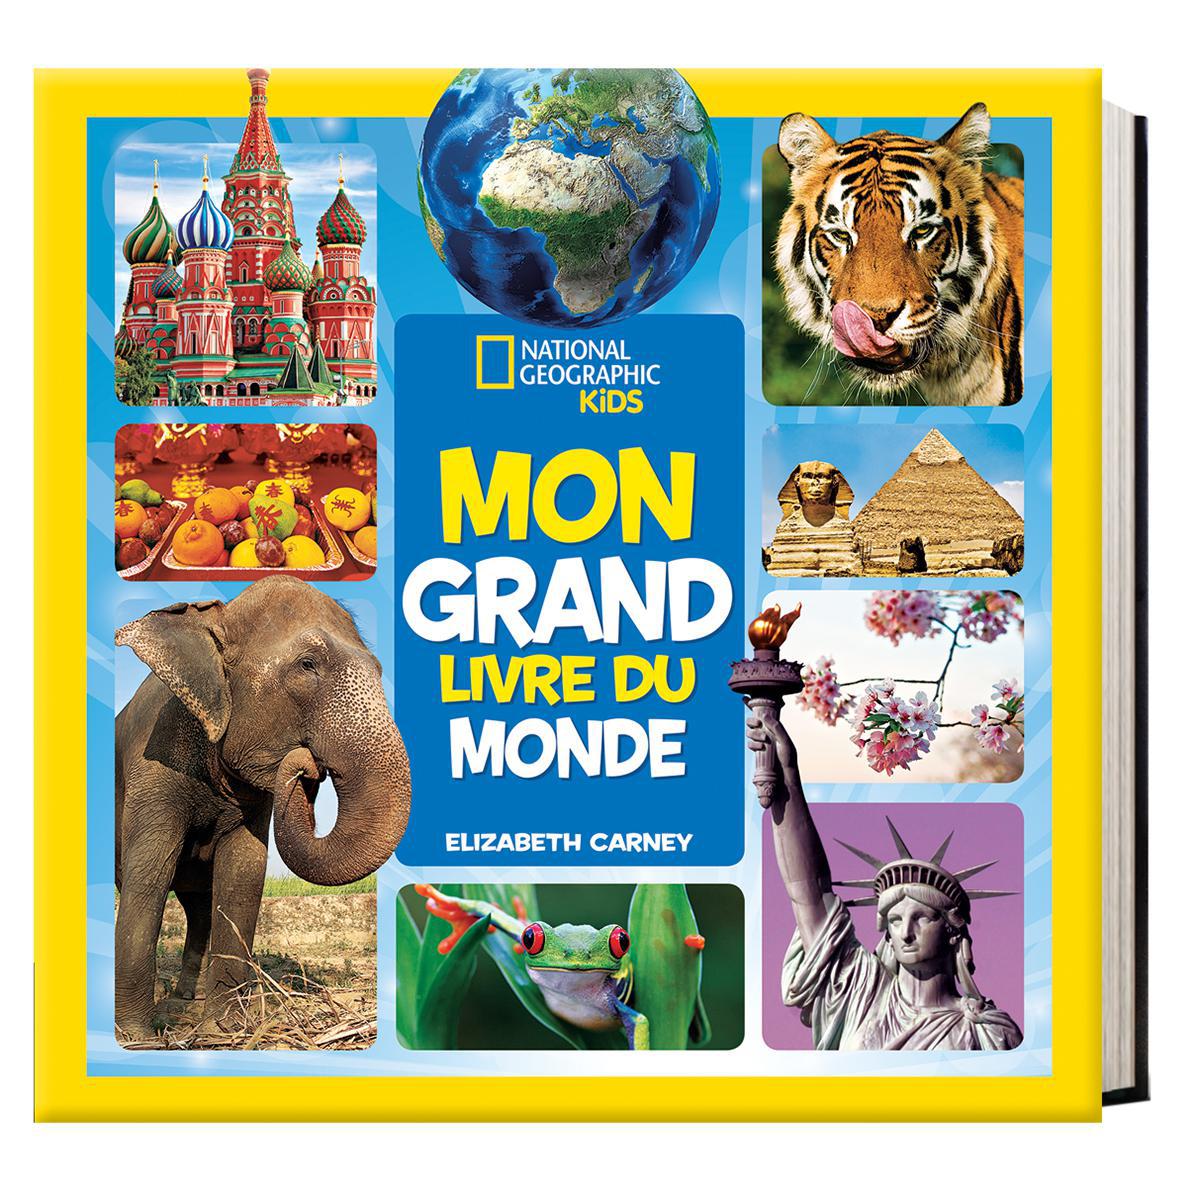  National Geographic Kids : Mon grand livre du monde 